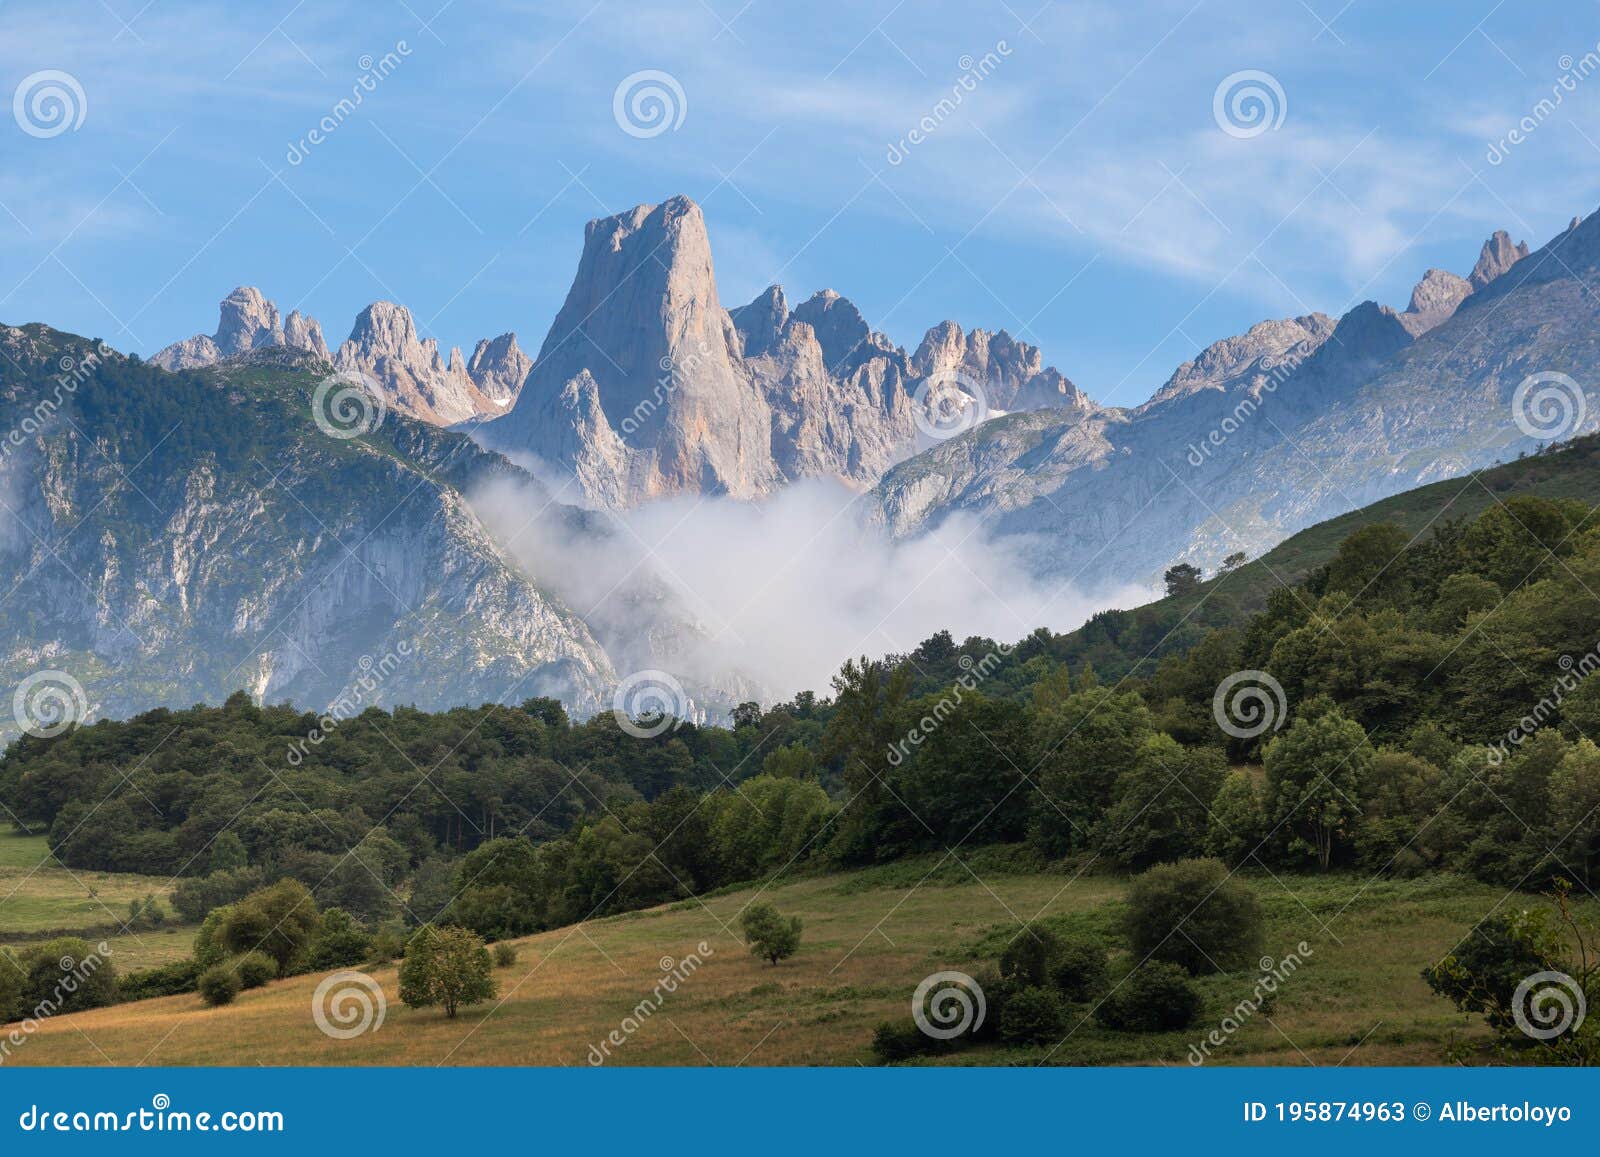 naranjo de bulnes, picu urriellu, from pozo de la oracion lookout point in picos de europa national park, asturias in spa